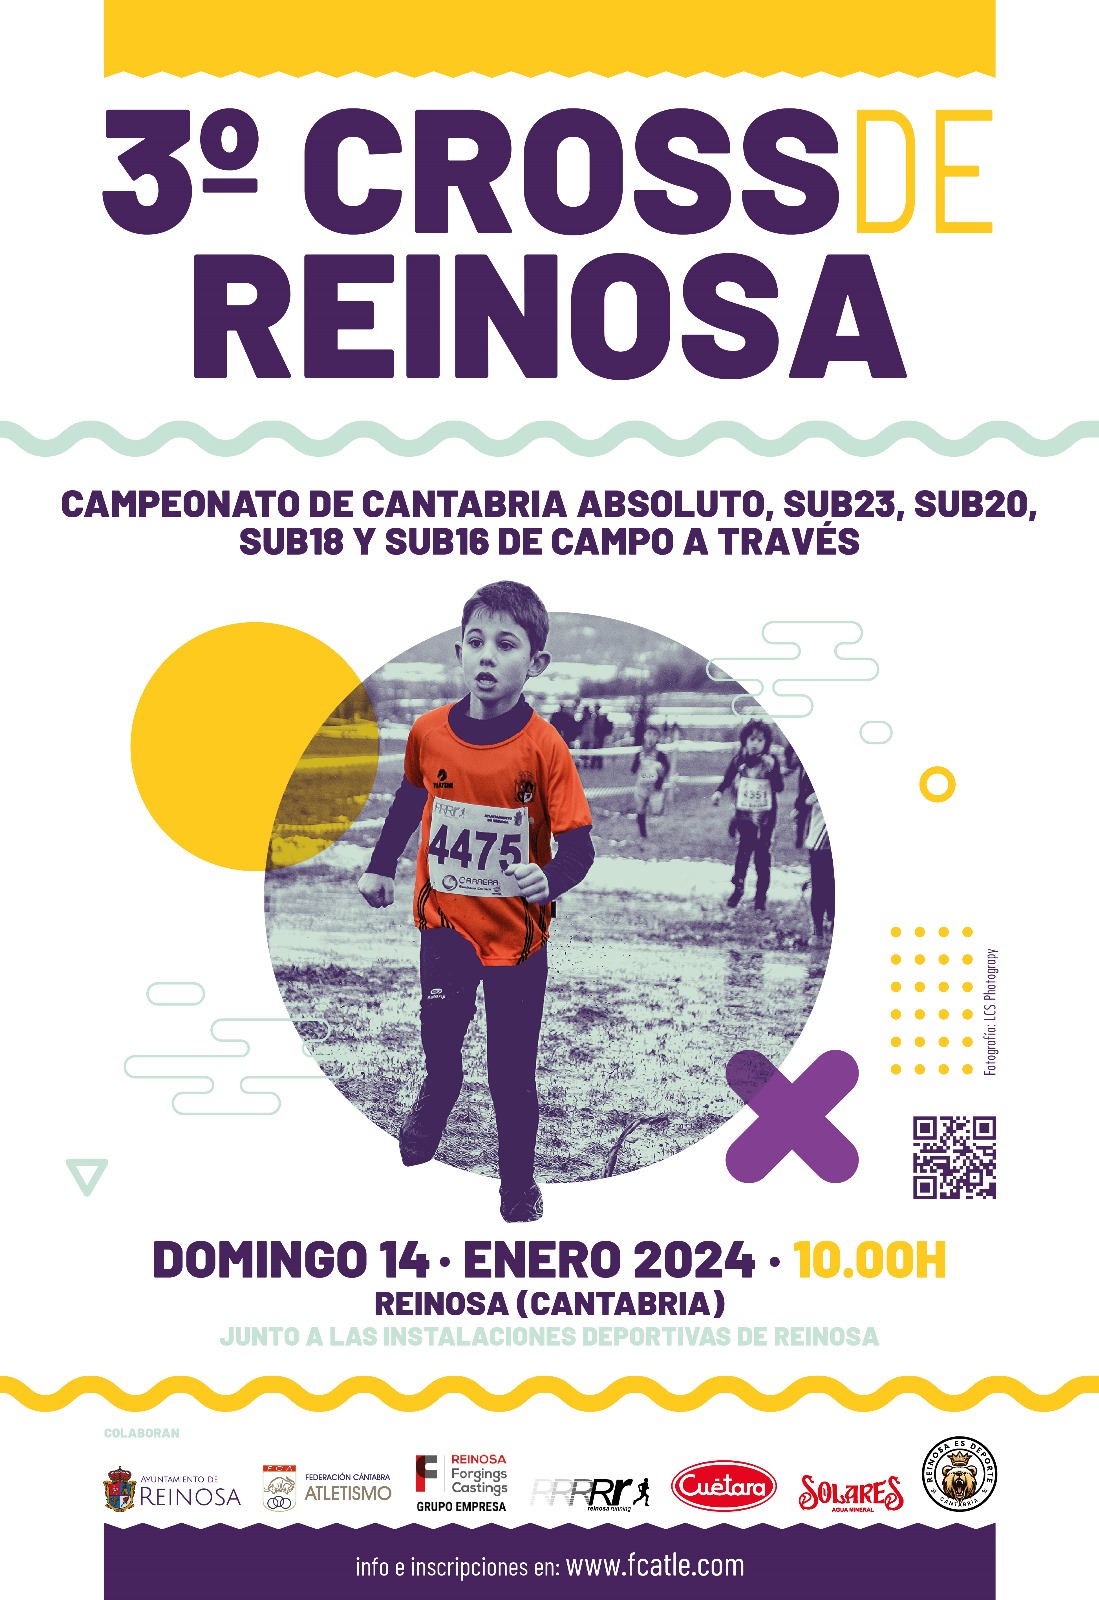 III Cross de Reinosa / Campeonato de Cantabria Absoluto, Sub23, Sub20, Sub18 y Sub16 de Campo a Través @ Reinosa, Cantabria